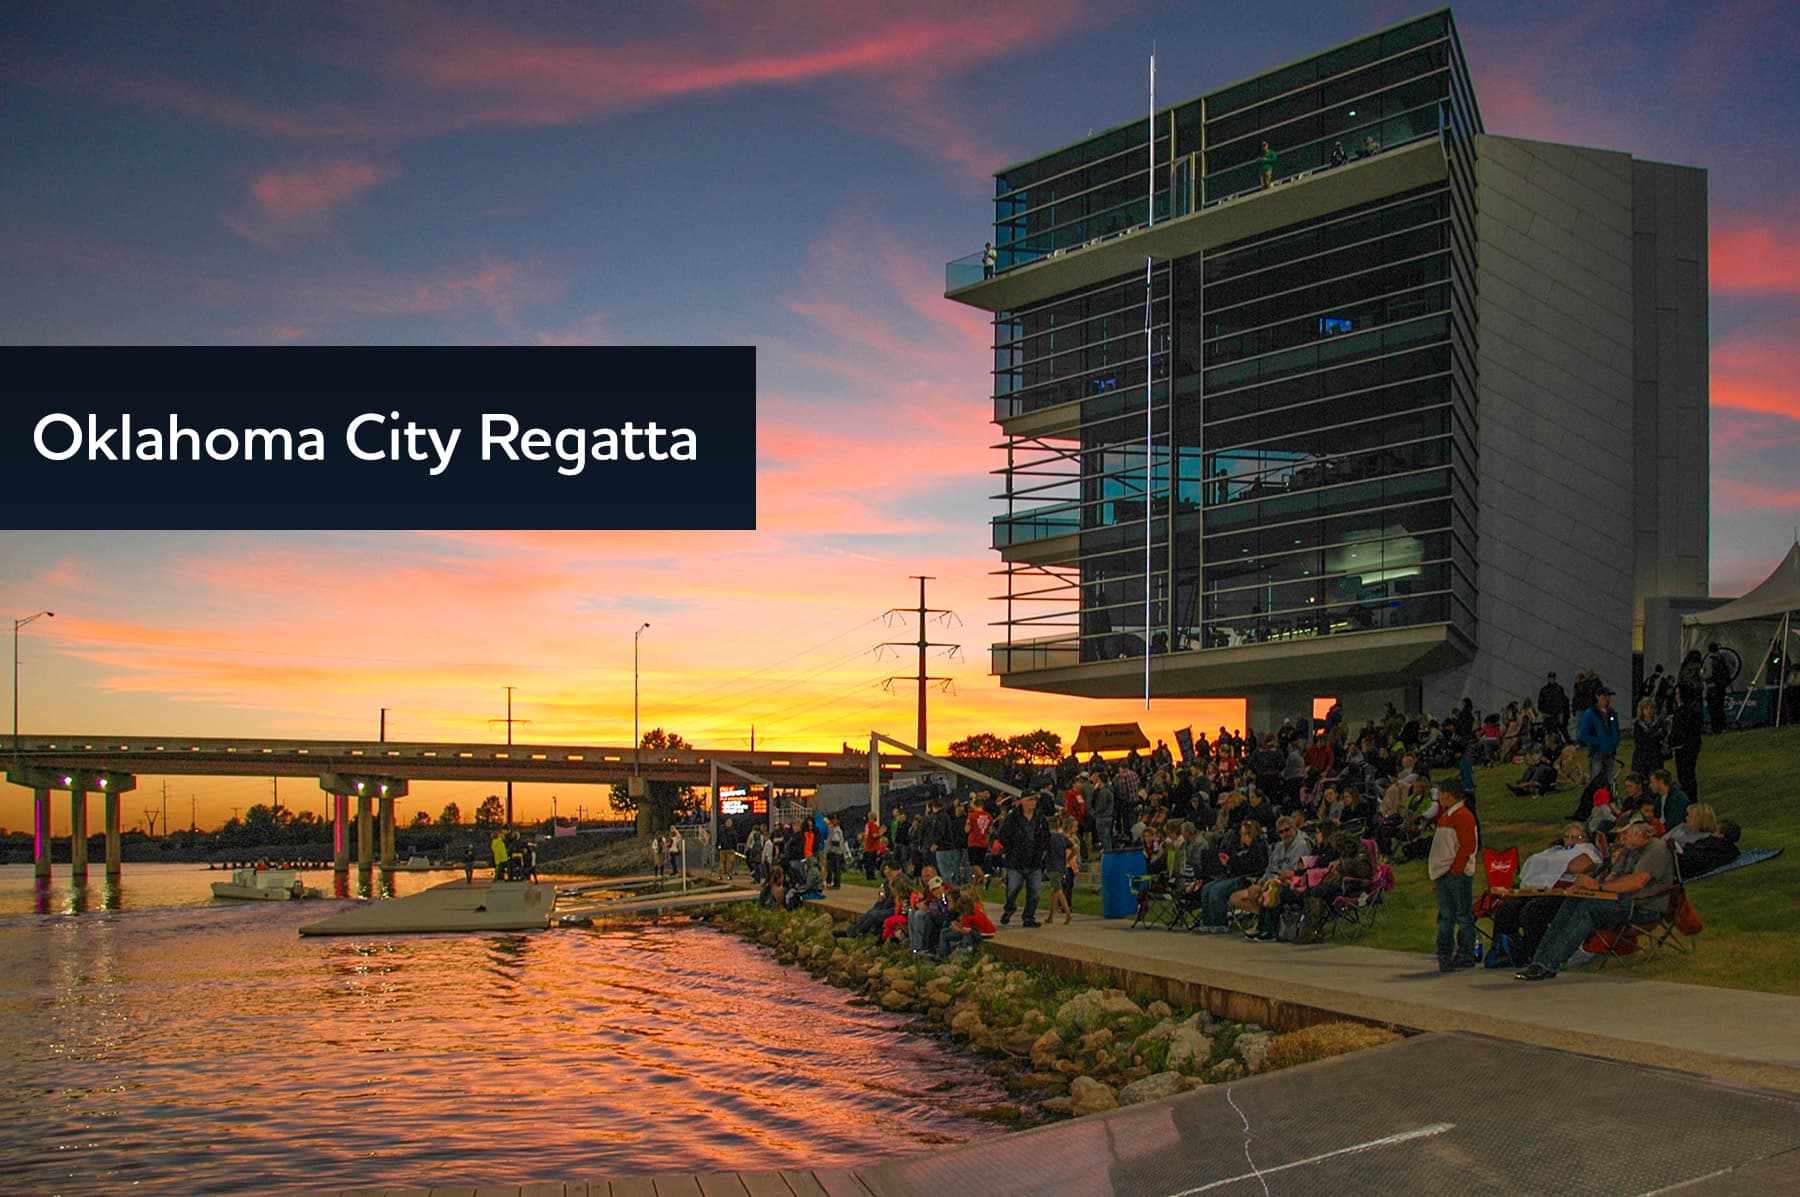 Oklahoma City Regatta